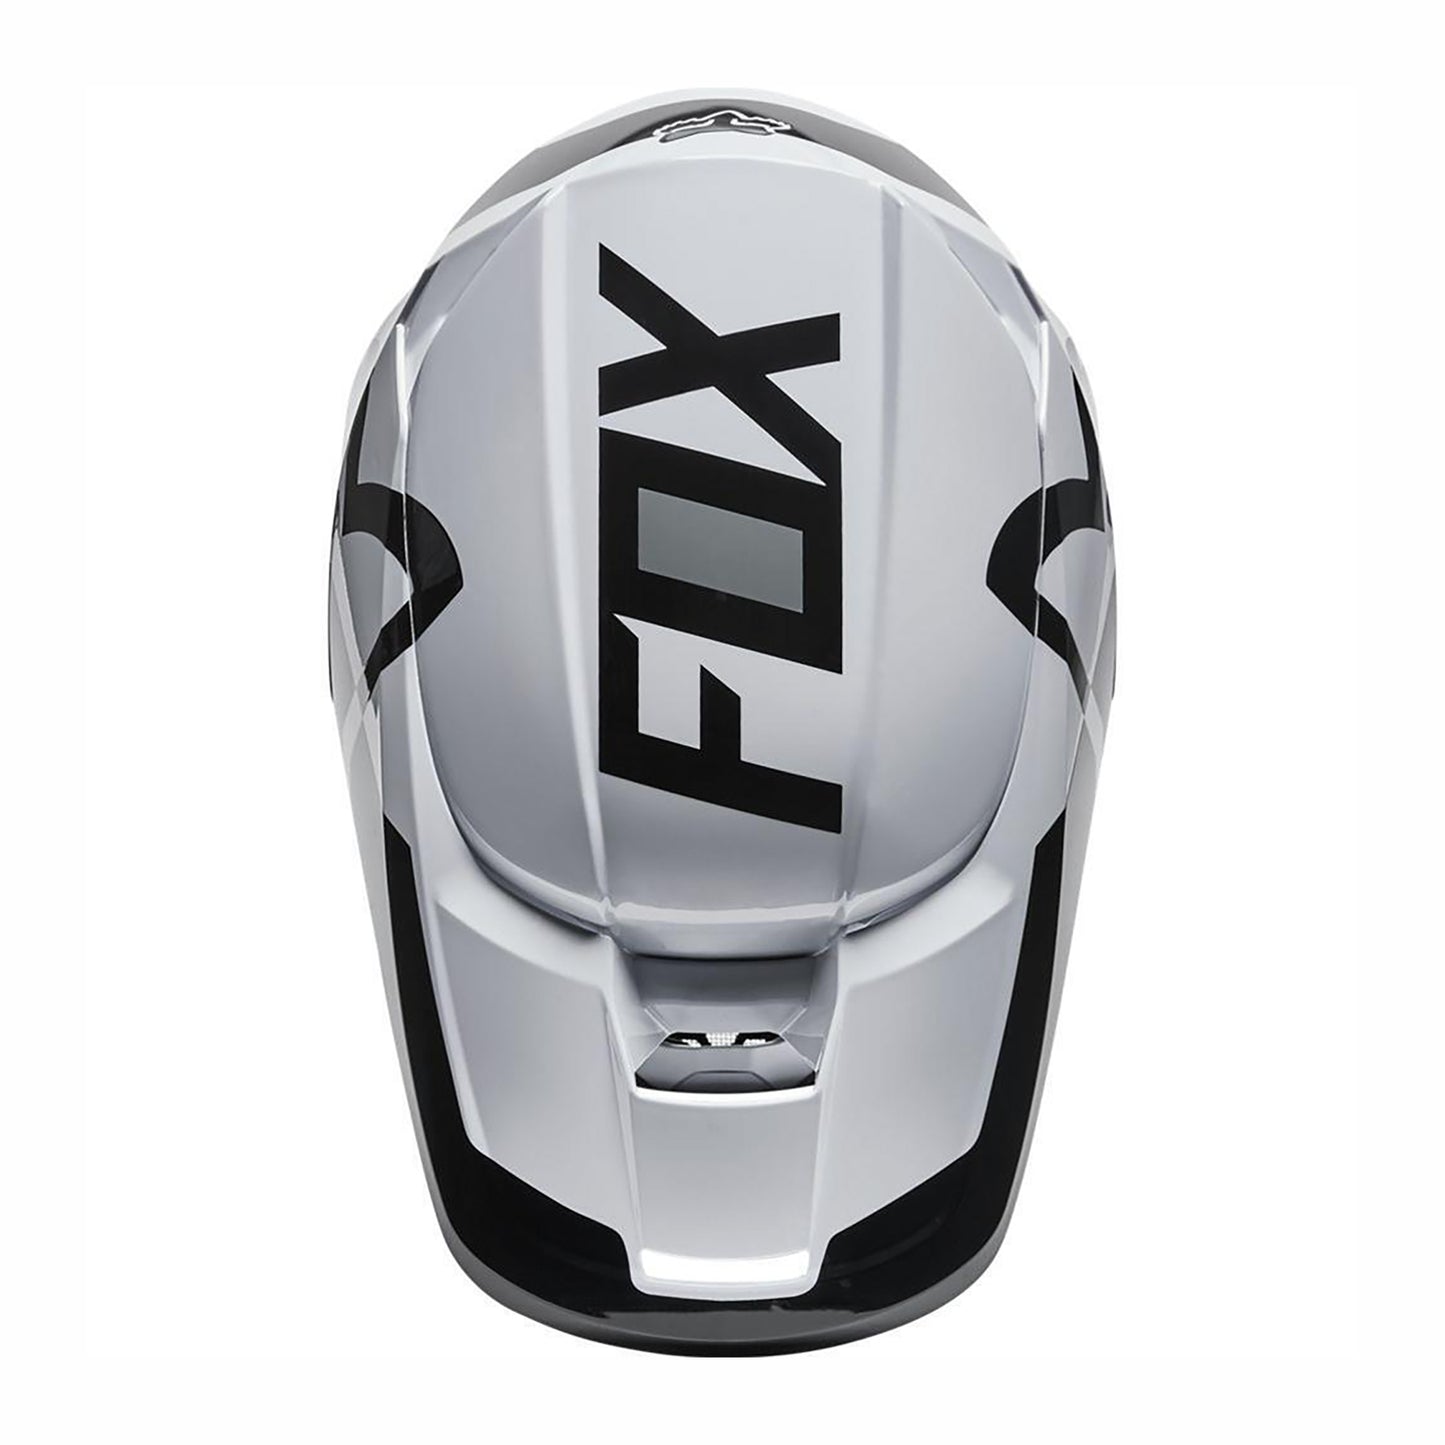 Fox Racing Youth V1 Lux Helmet